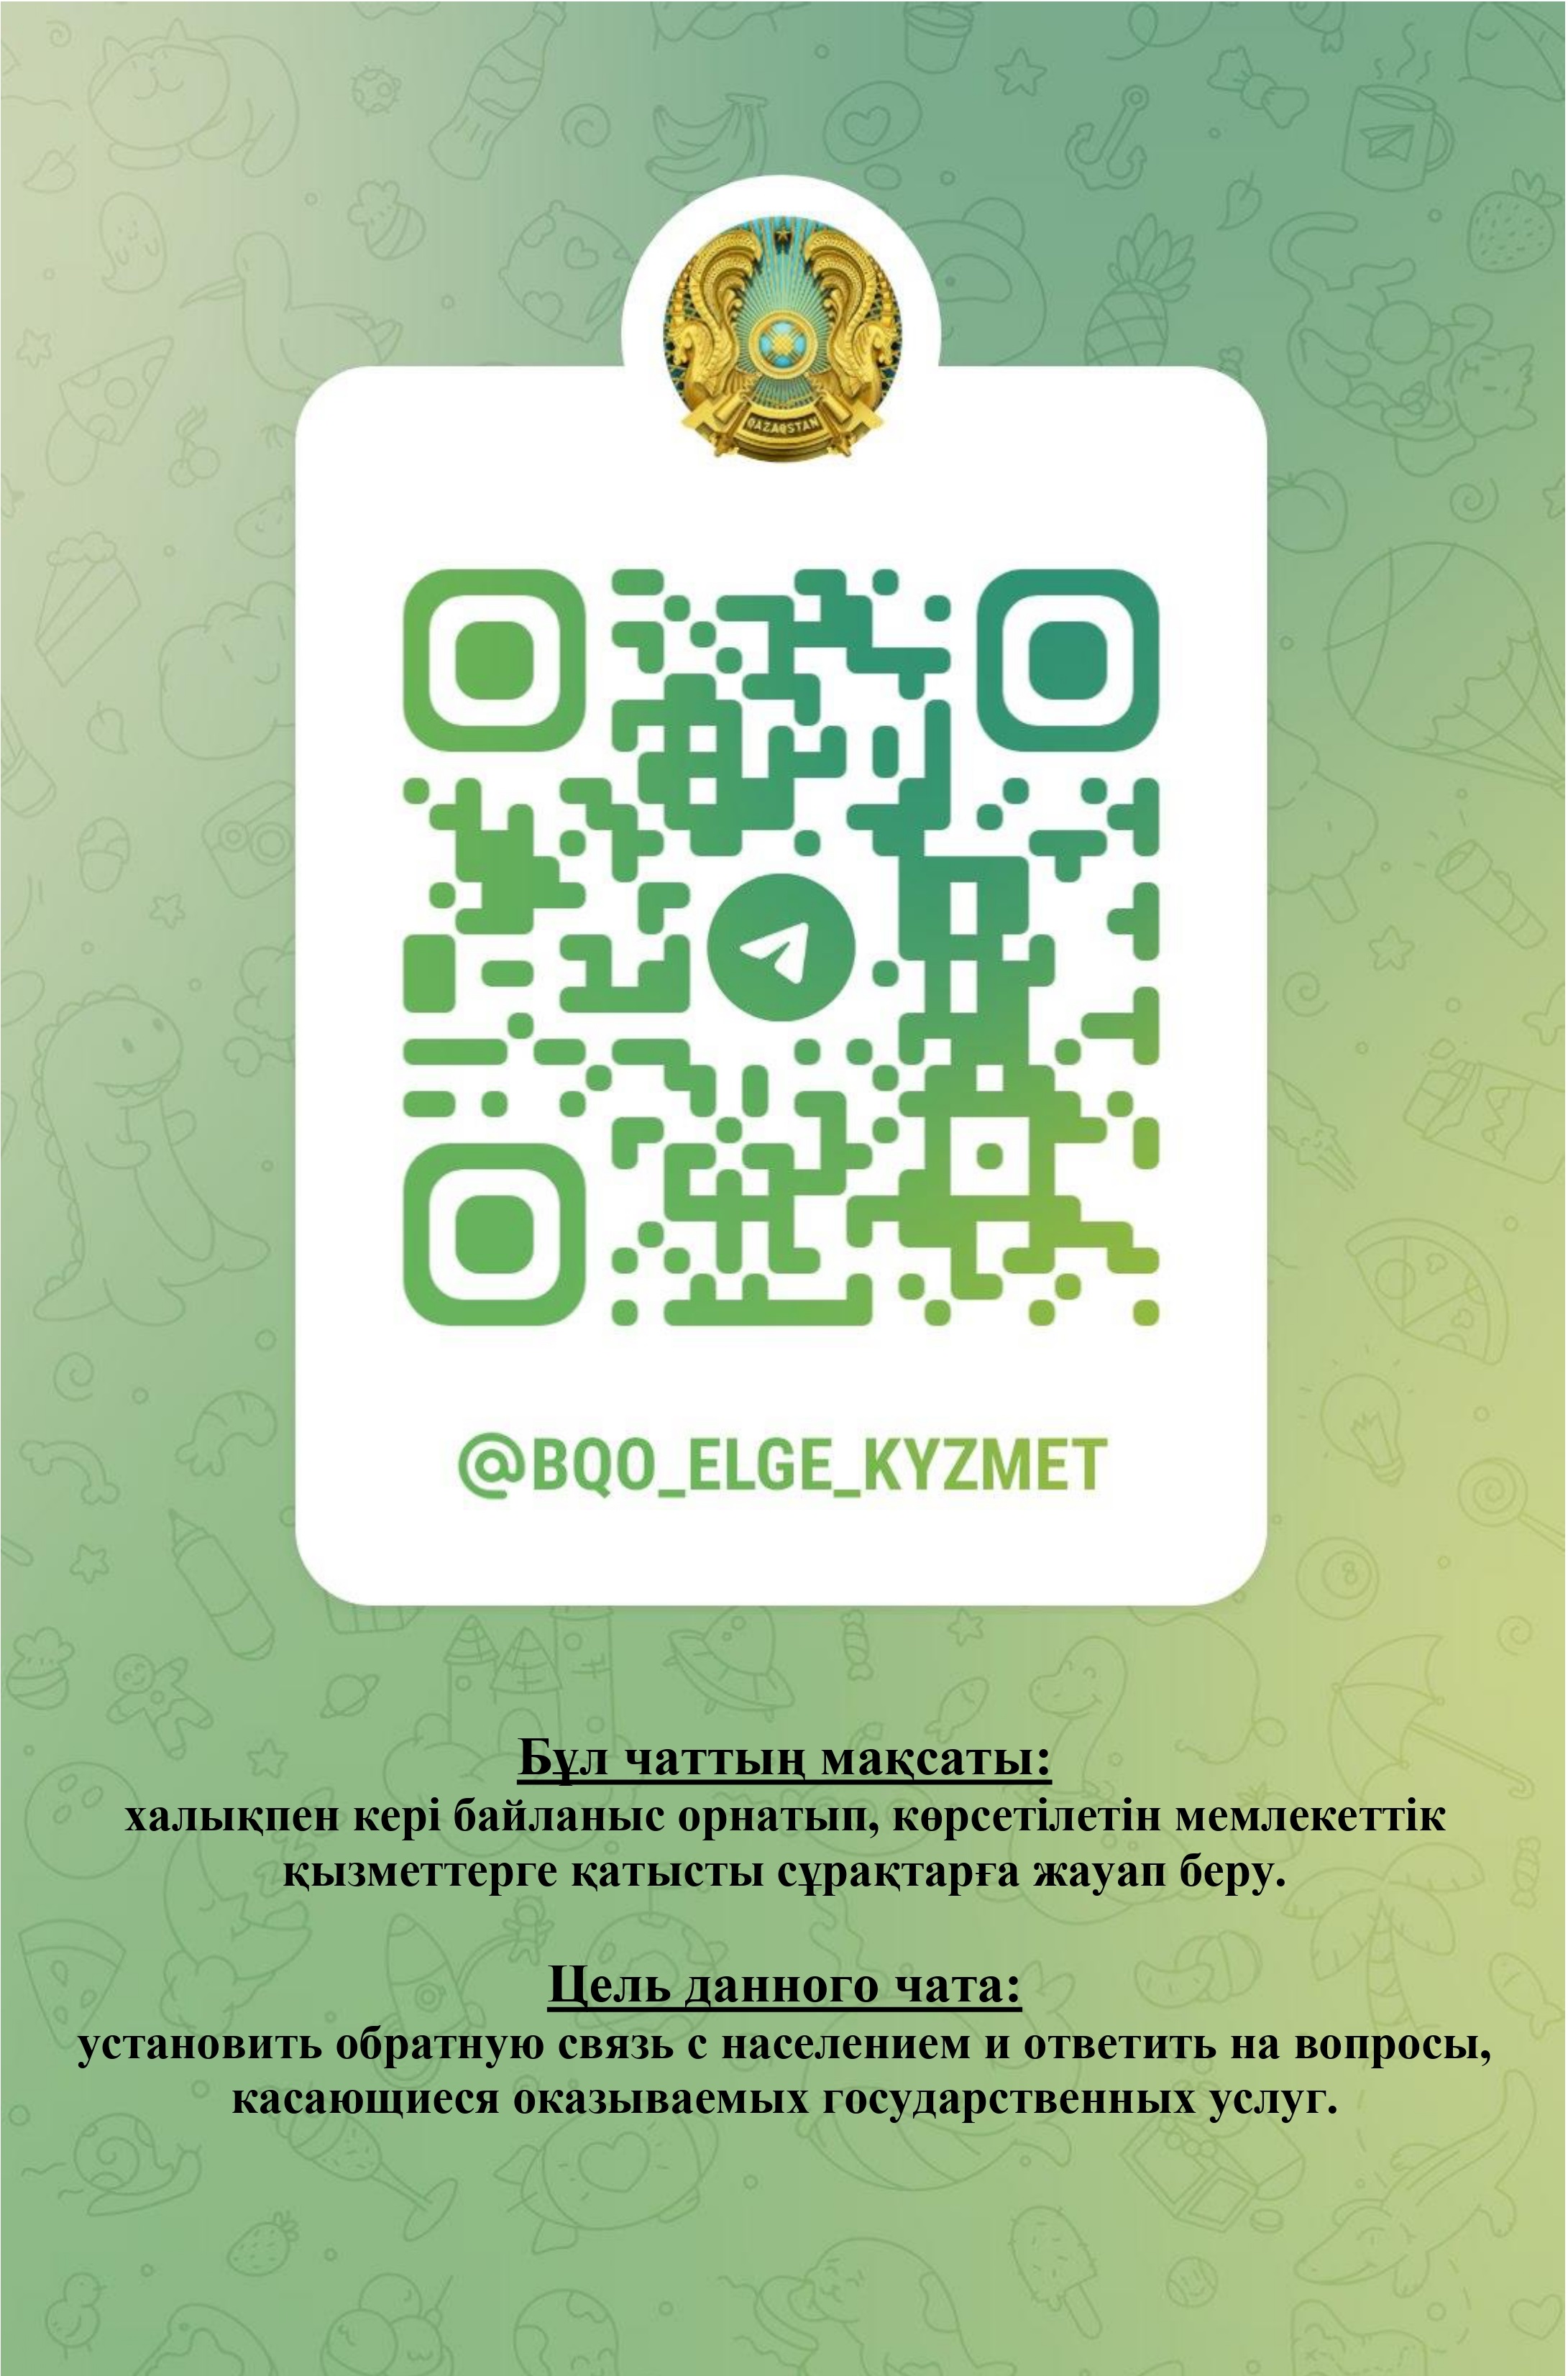 Telegram chat "BQO elge kyzmet" launched